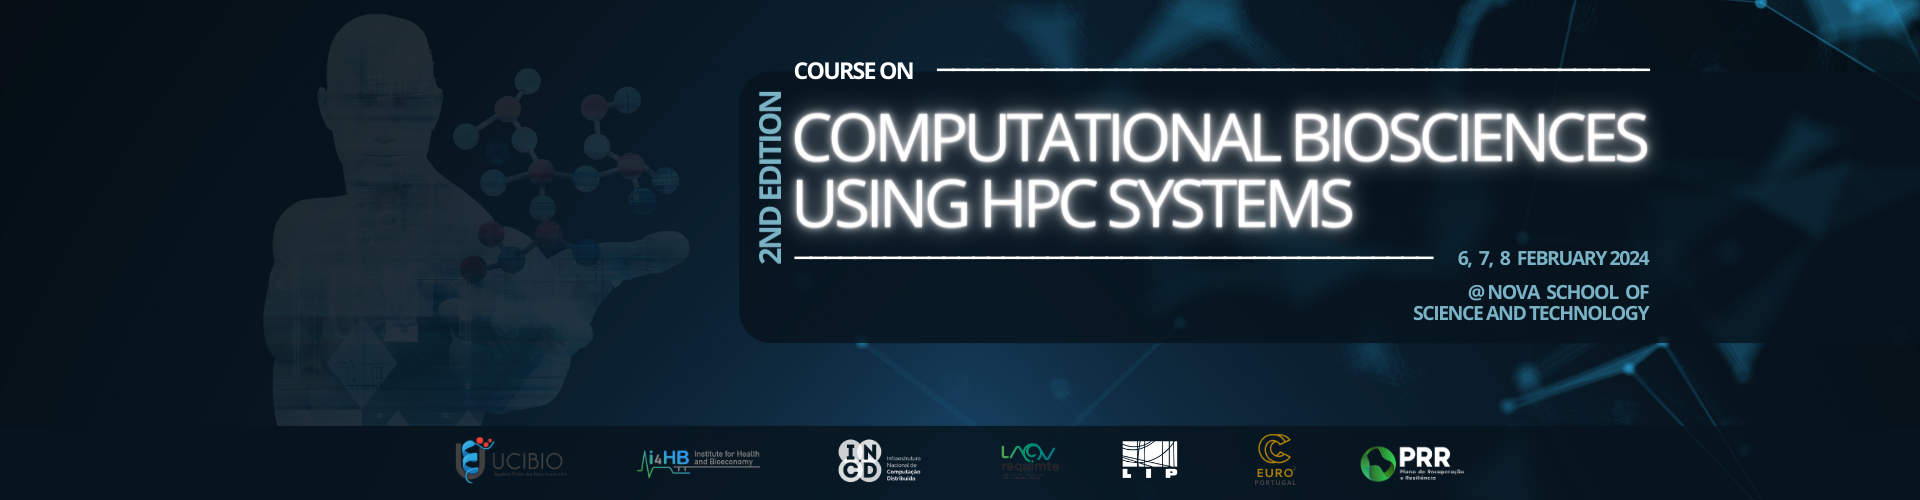 2nd Edition of Course on Computational Biosciences using HPC systems (UCIBIO / LAQV / INCD)